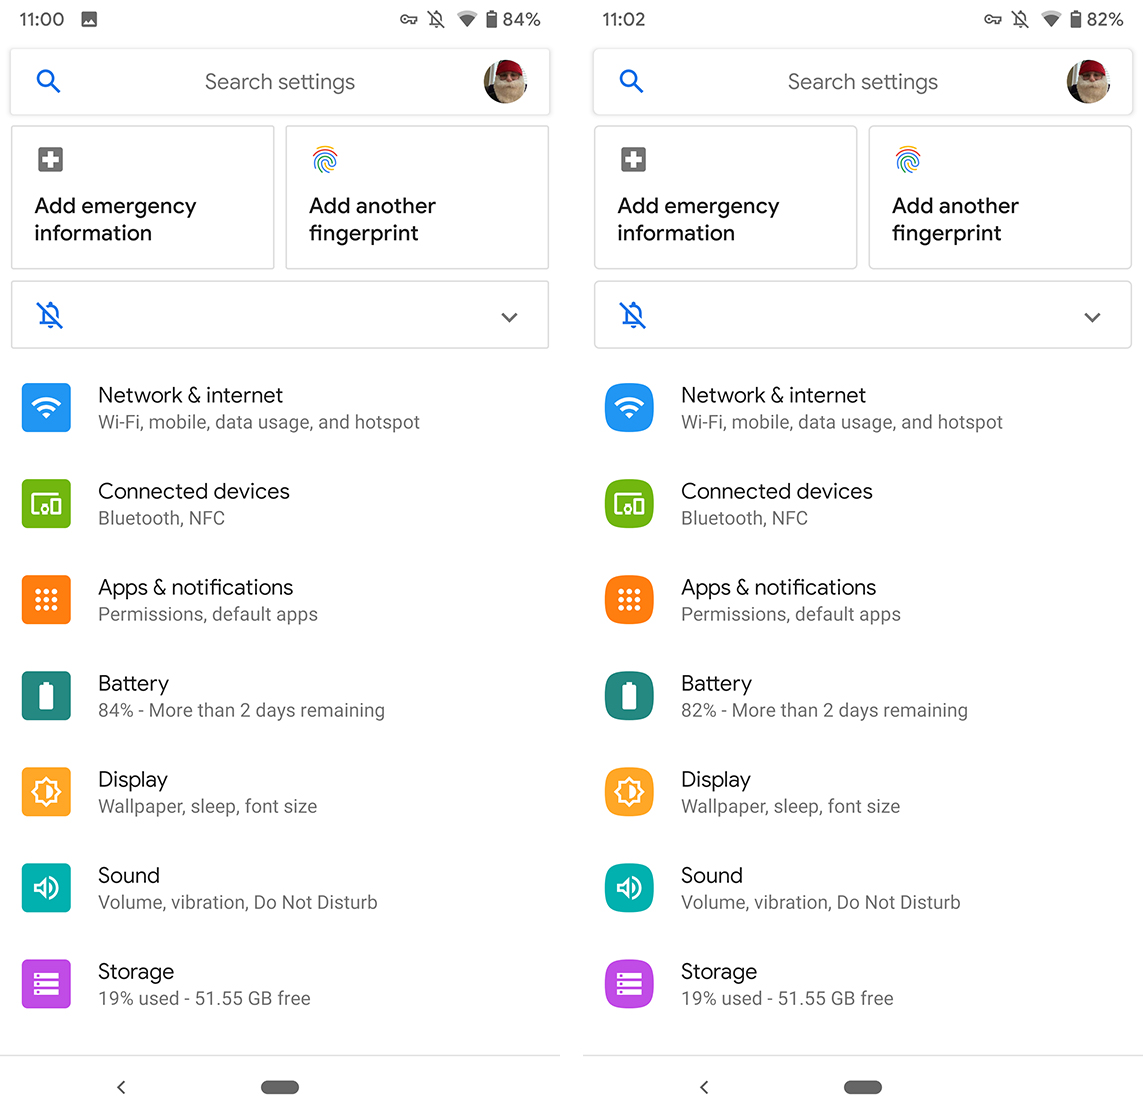 Android Q Settings menu icons